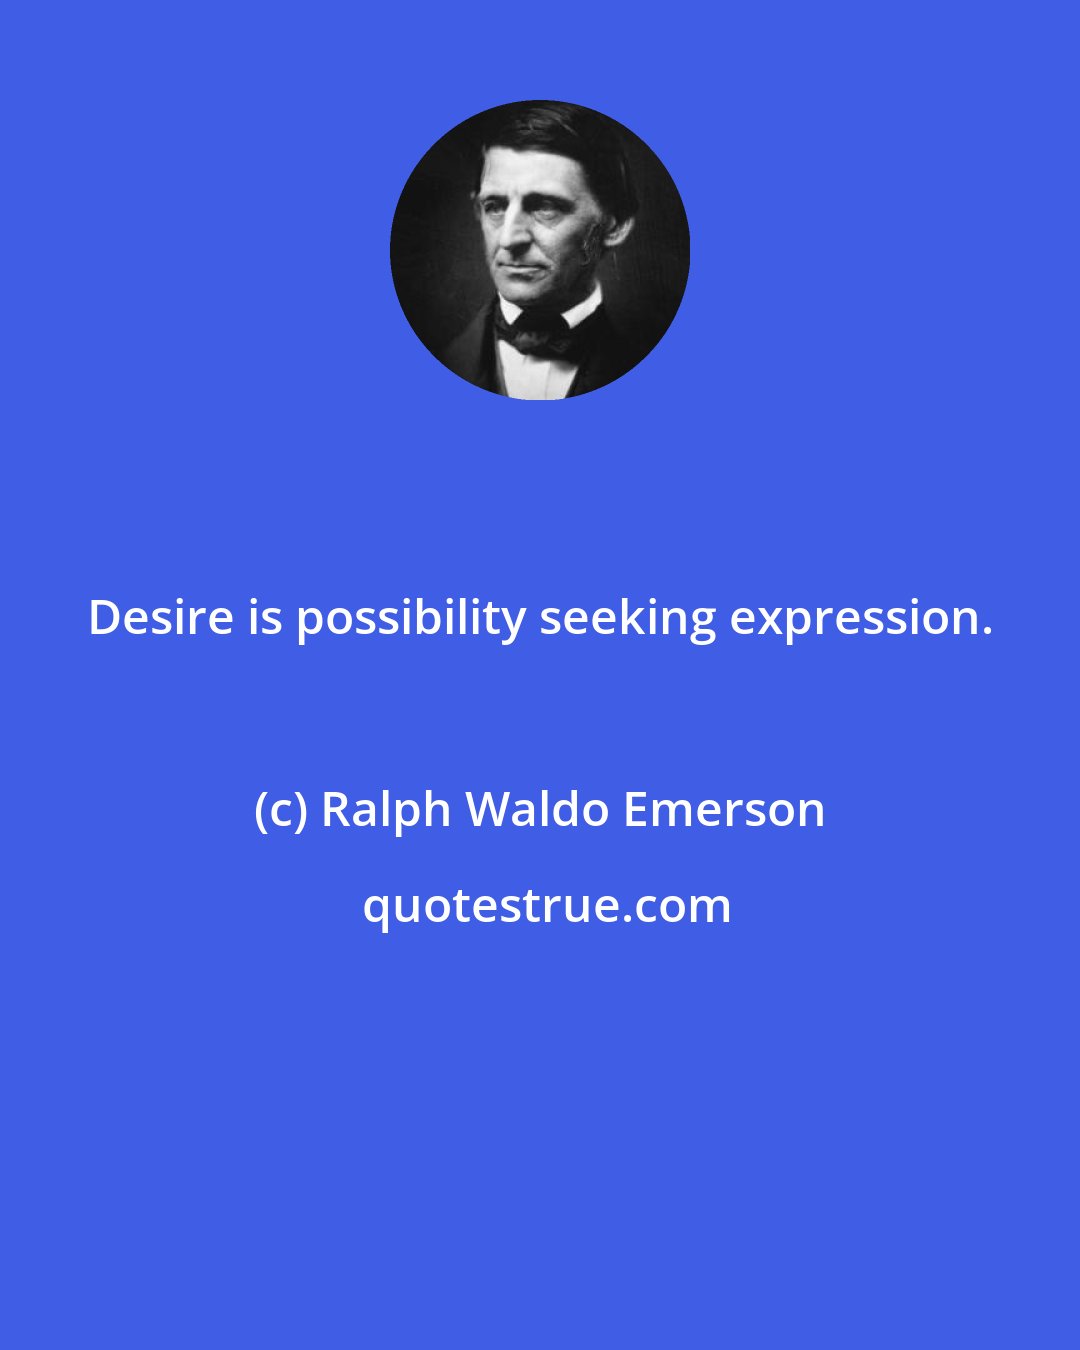 Ralph Waldo Emerson: Desire is possibility seeking expression.